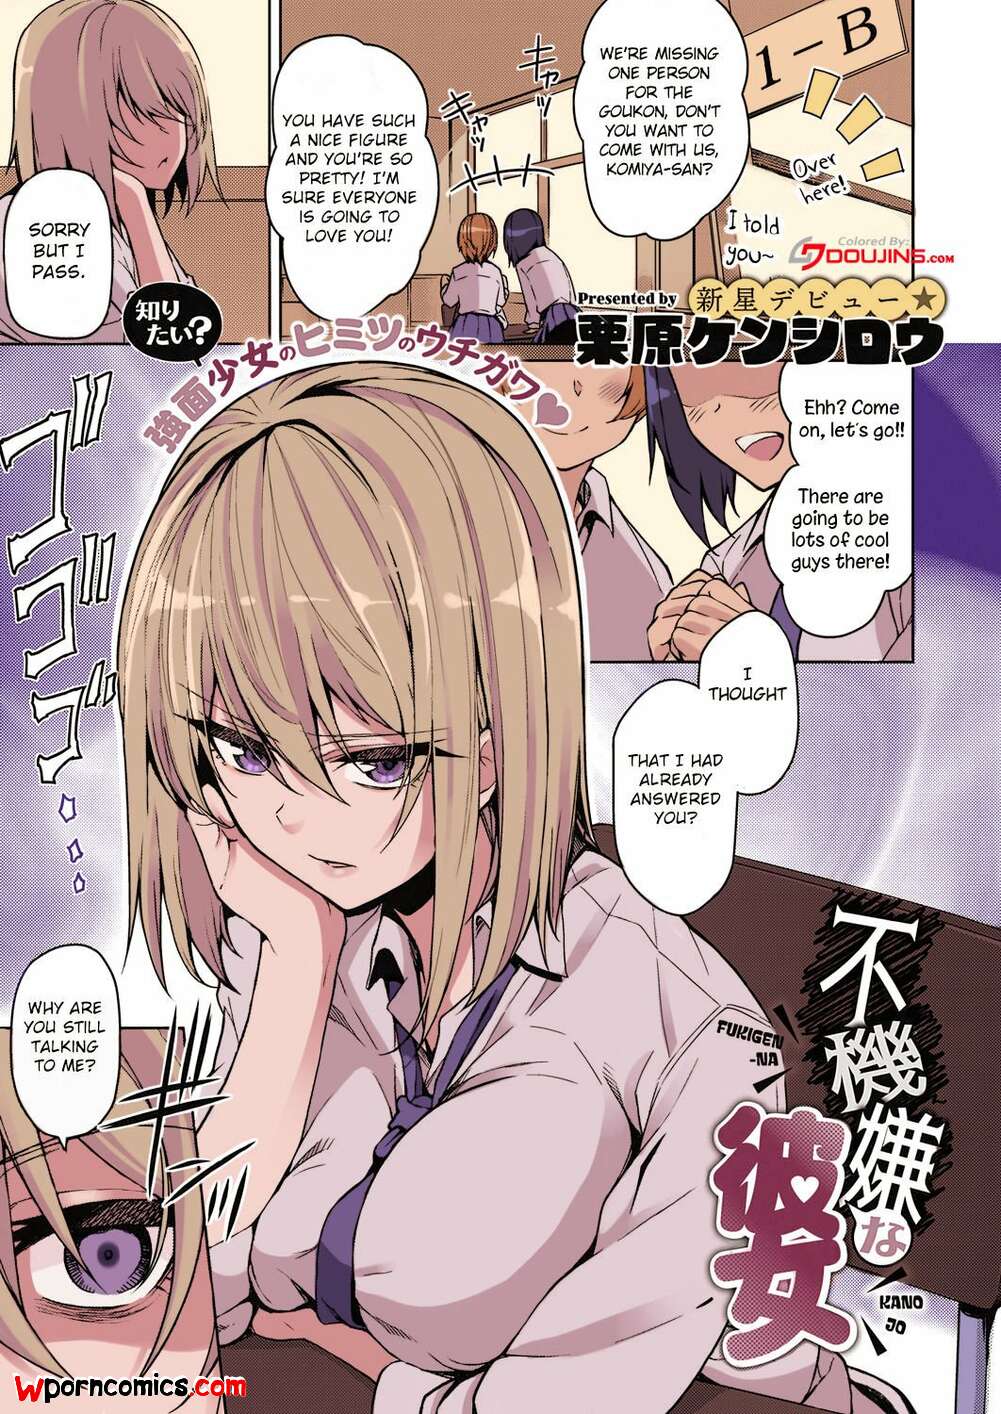 Anime porn comics